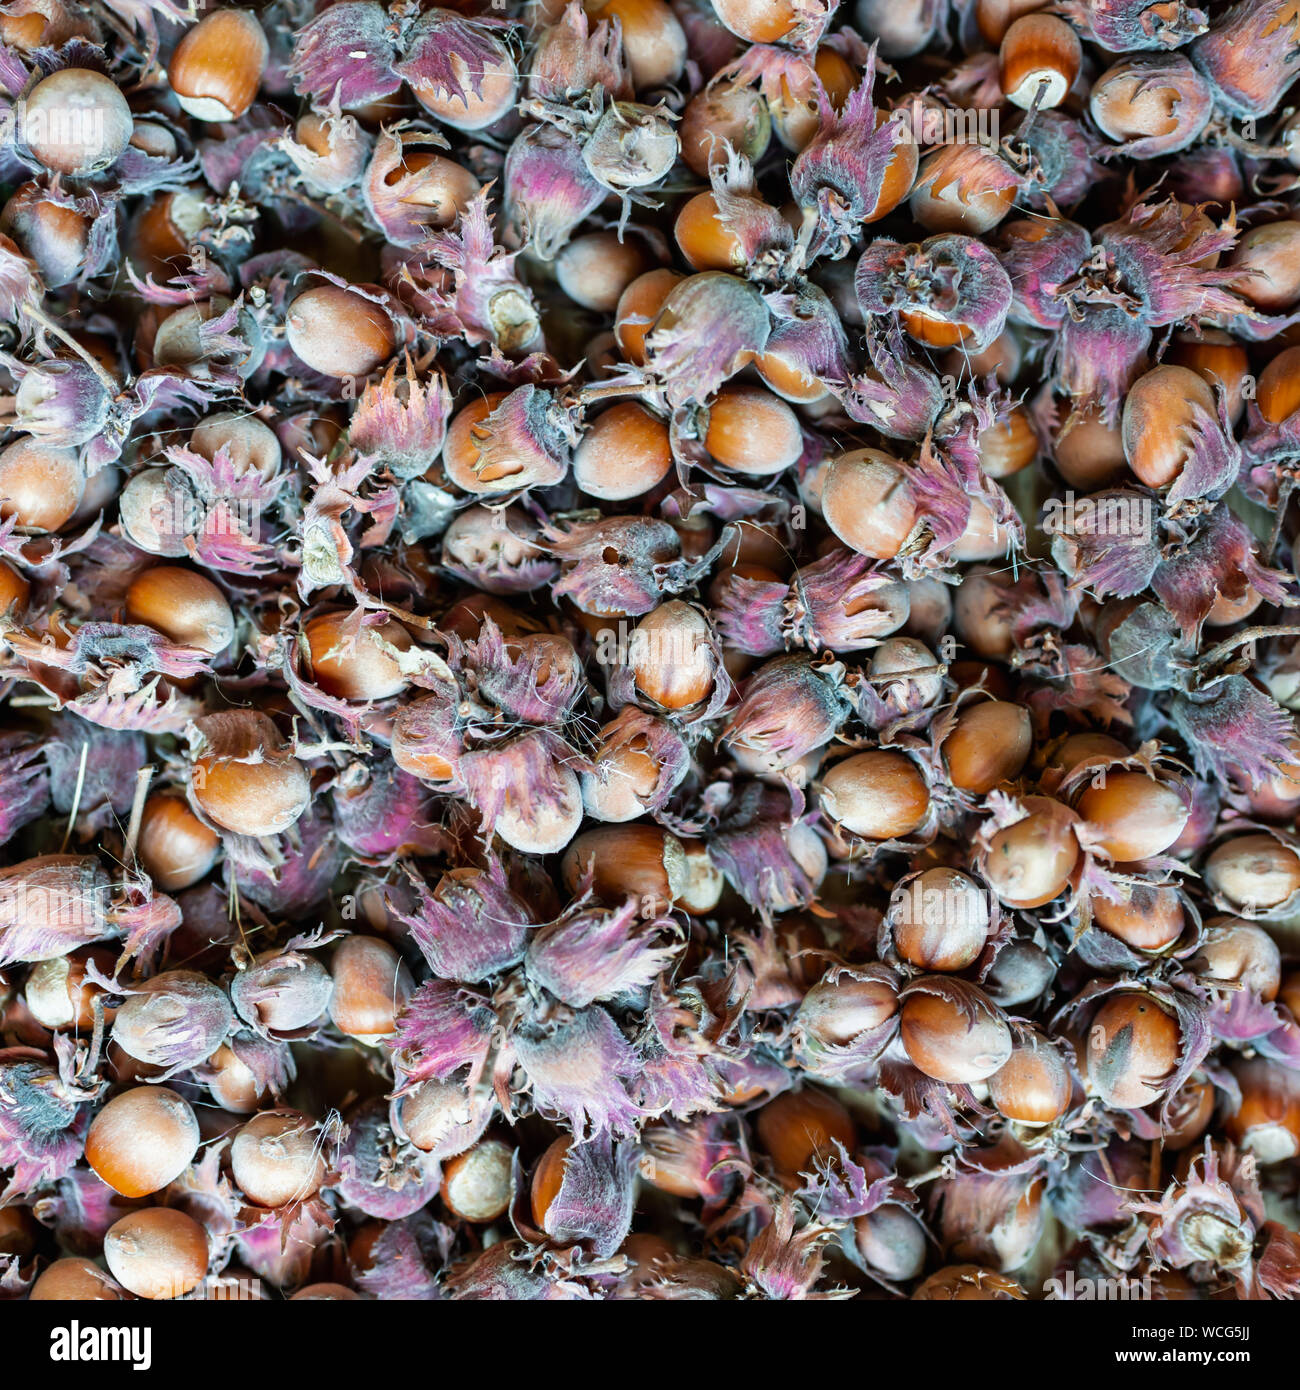 Hazelnut filbert nut Corylus Maxima. Organic cobnuts autumnal harvest still life photo. Macro view, selective focus. Stock Photo